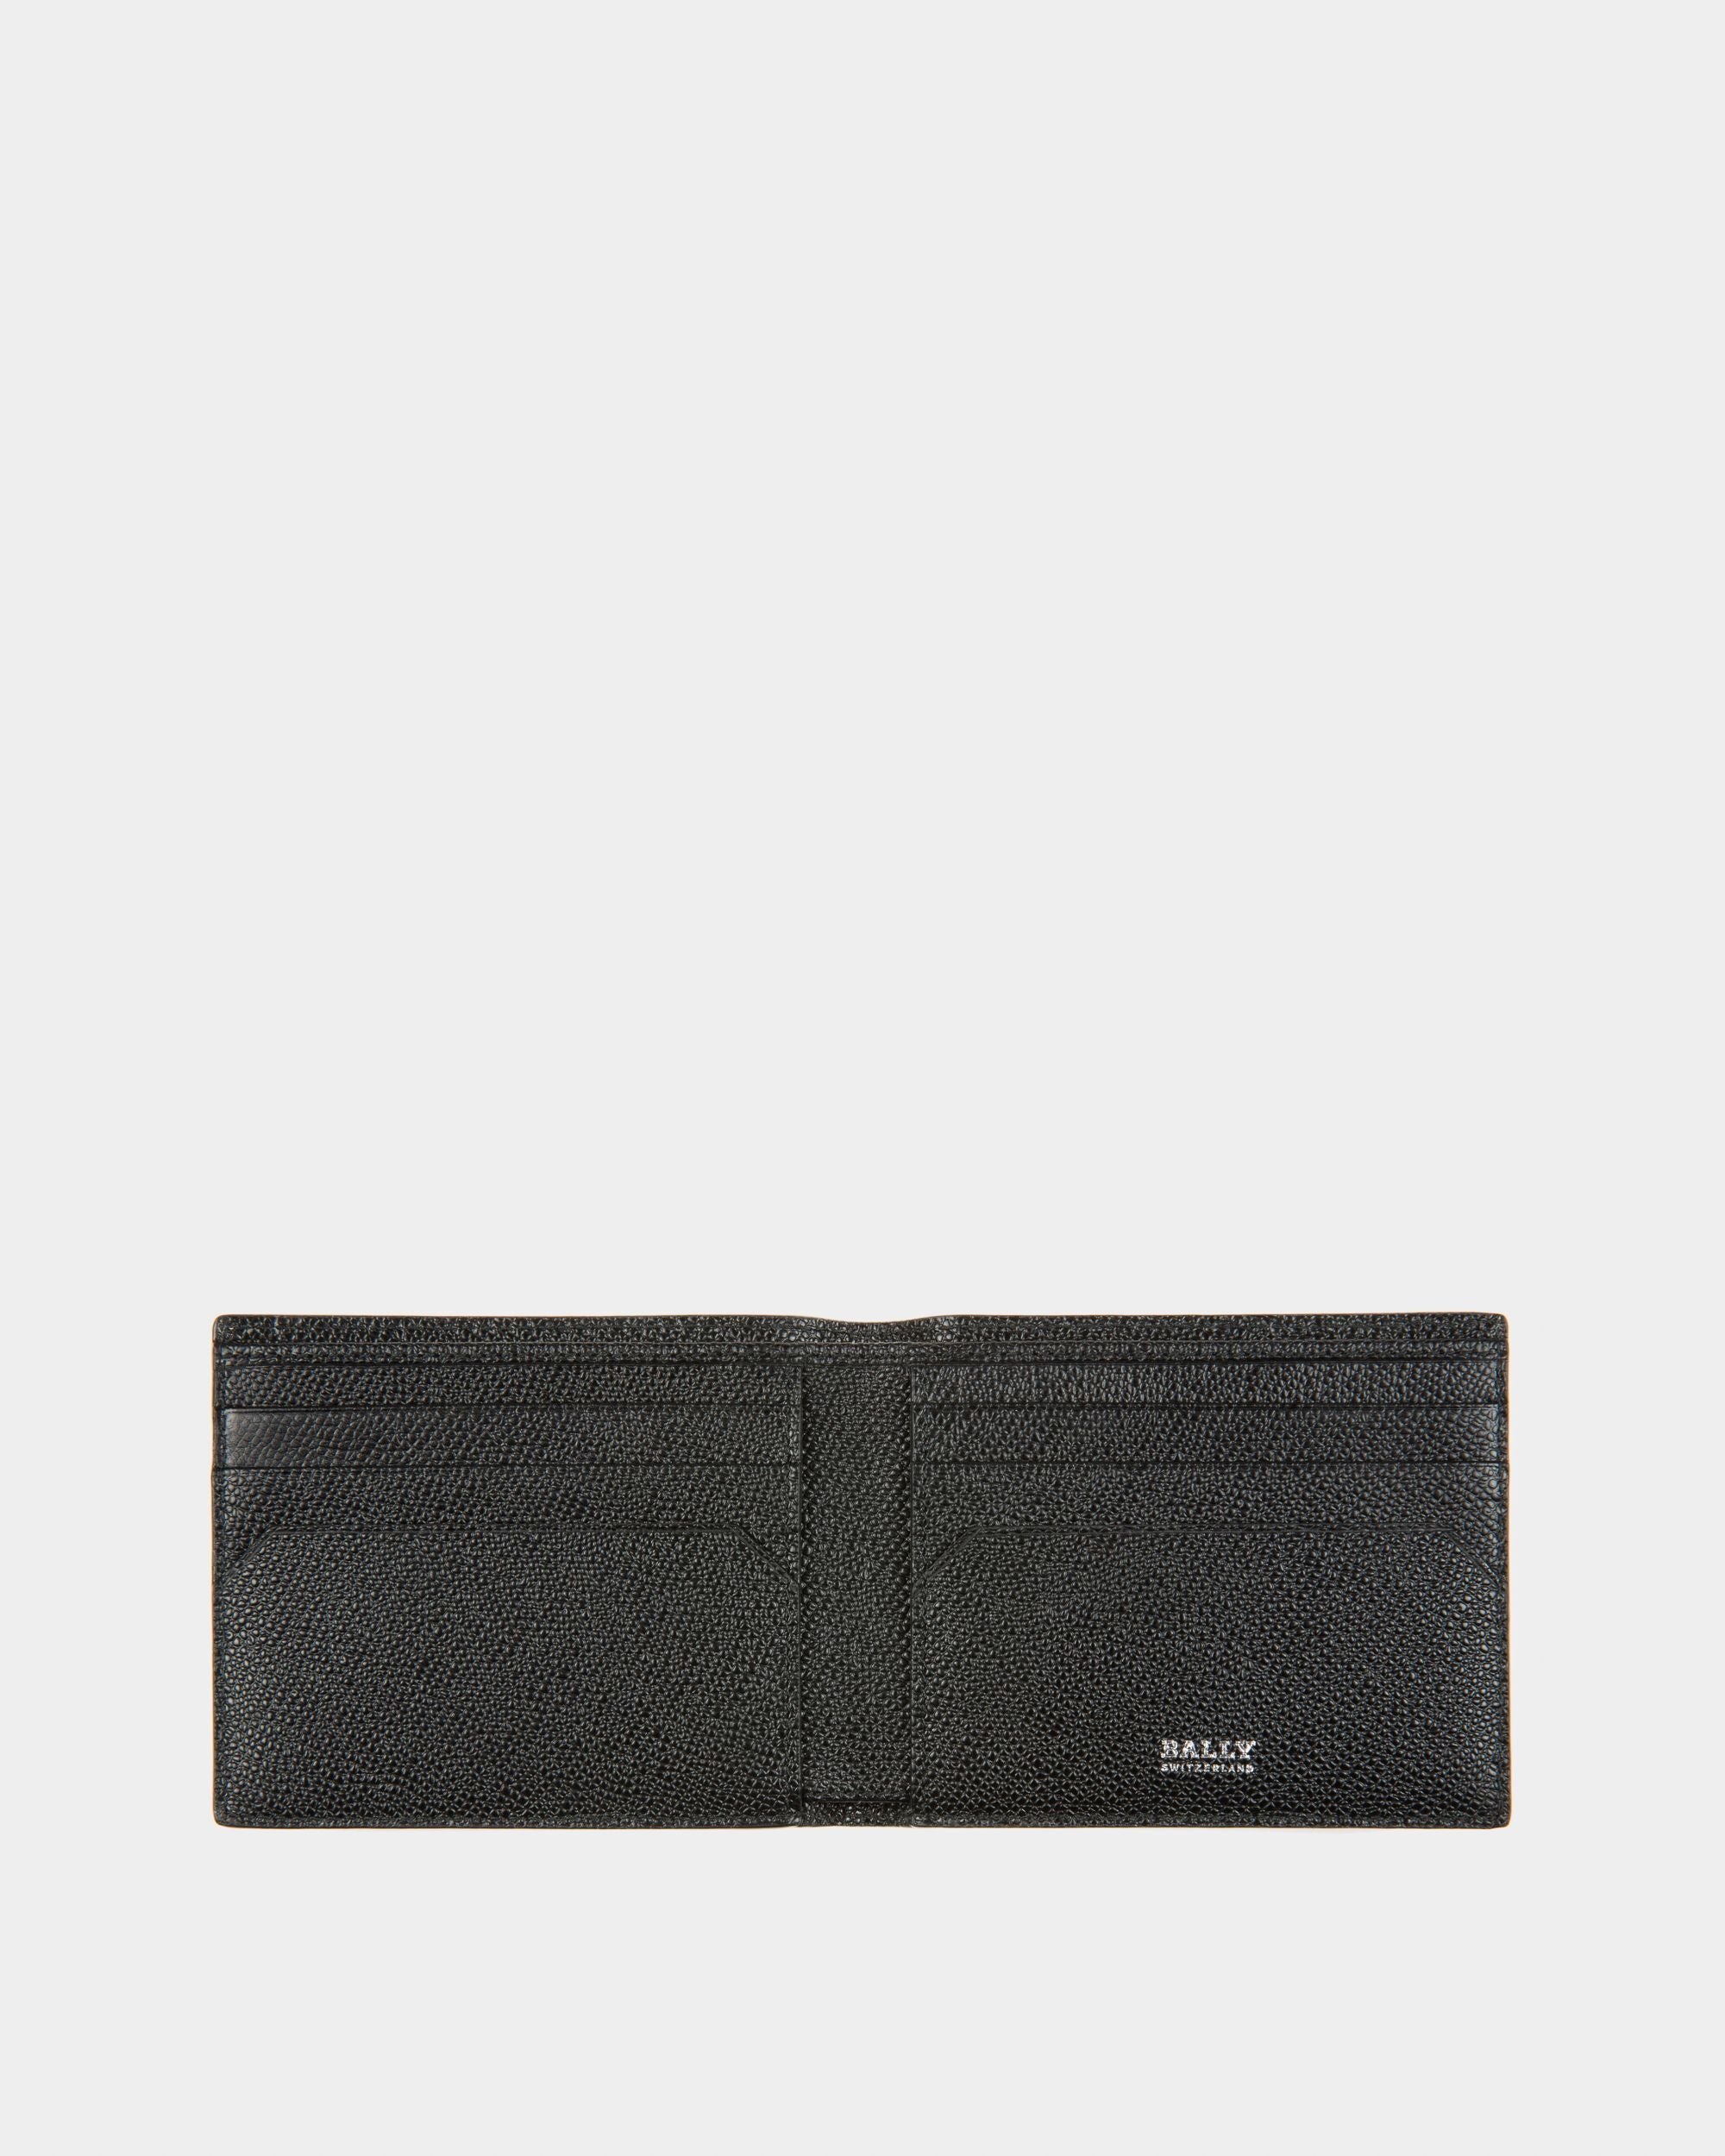 Trasai | Men's Wallet | Black Leather | Bally | Still Life Open / Inside